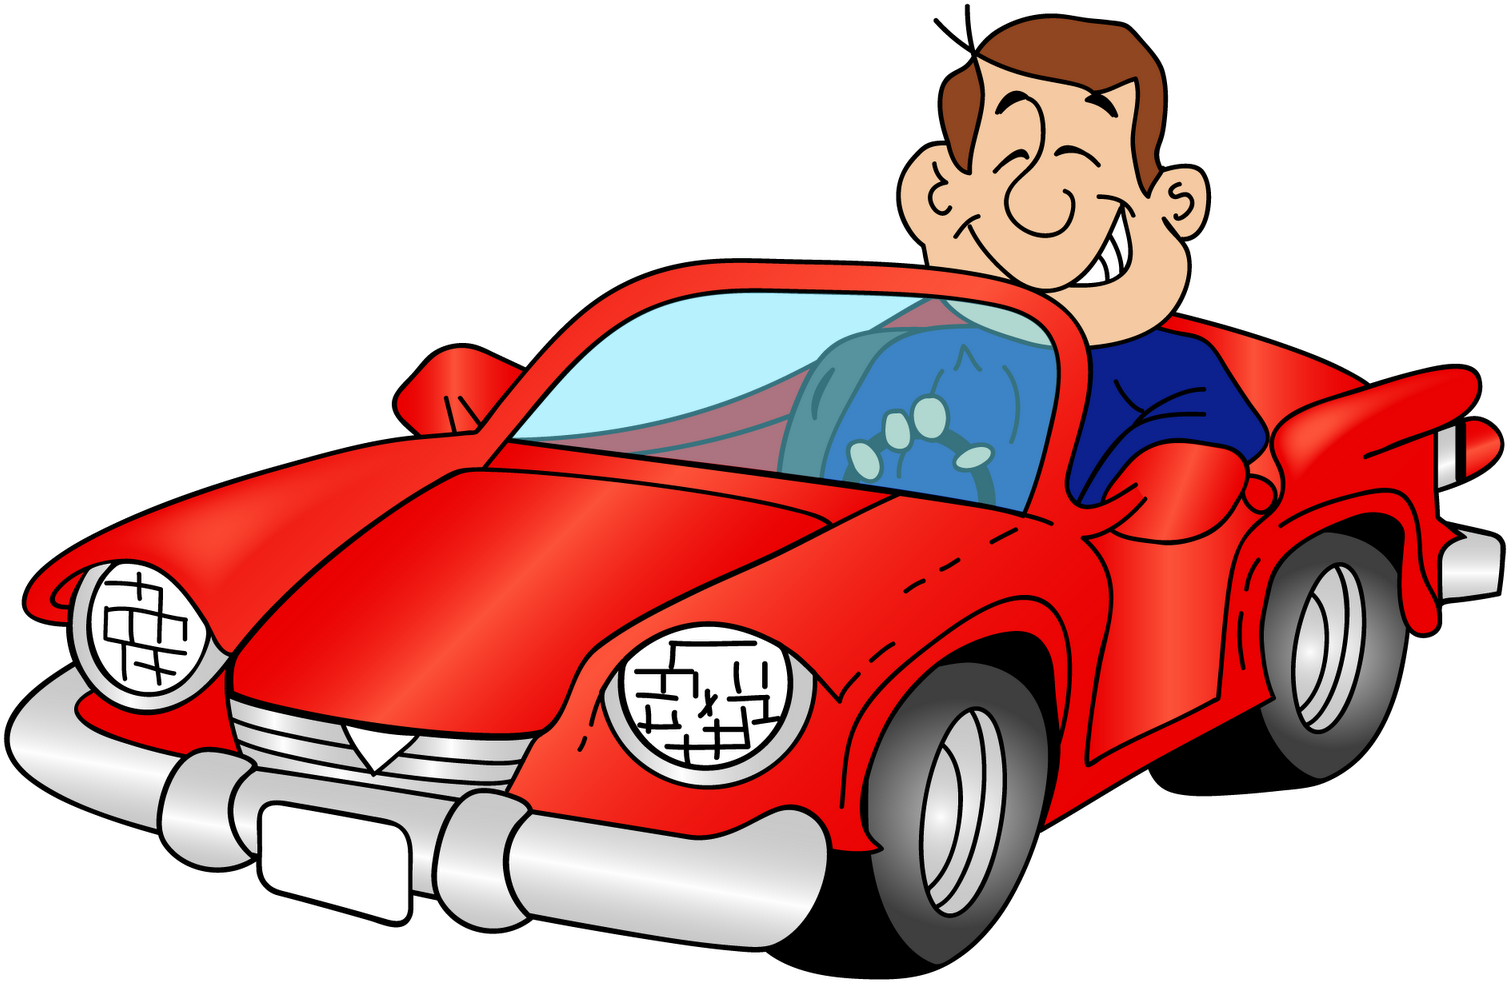 Cartoon Car With A Driver - Car With Driver Cartoon (1600x1200)